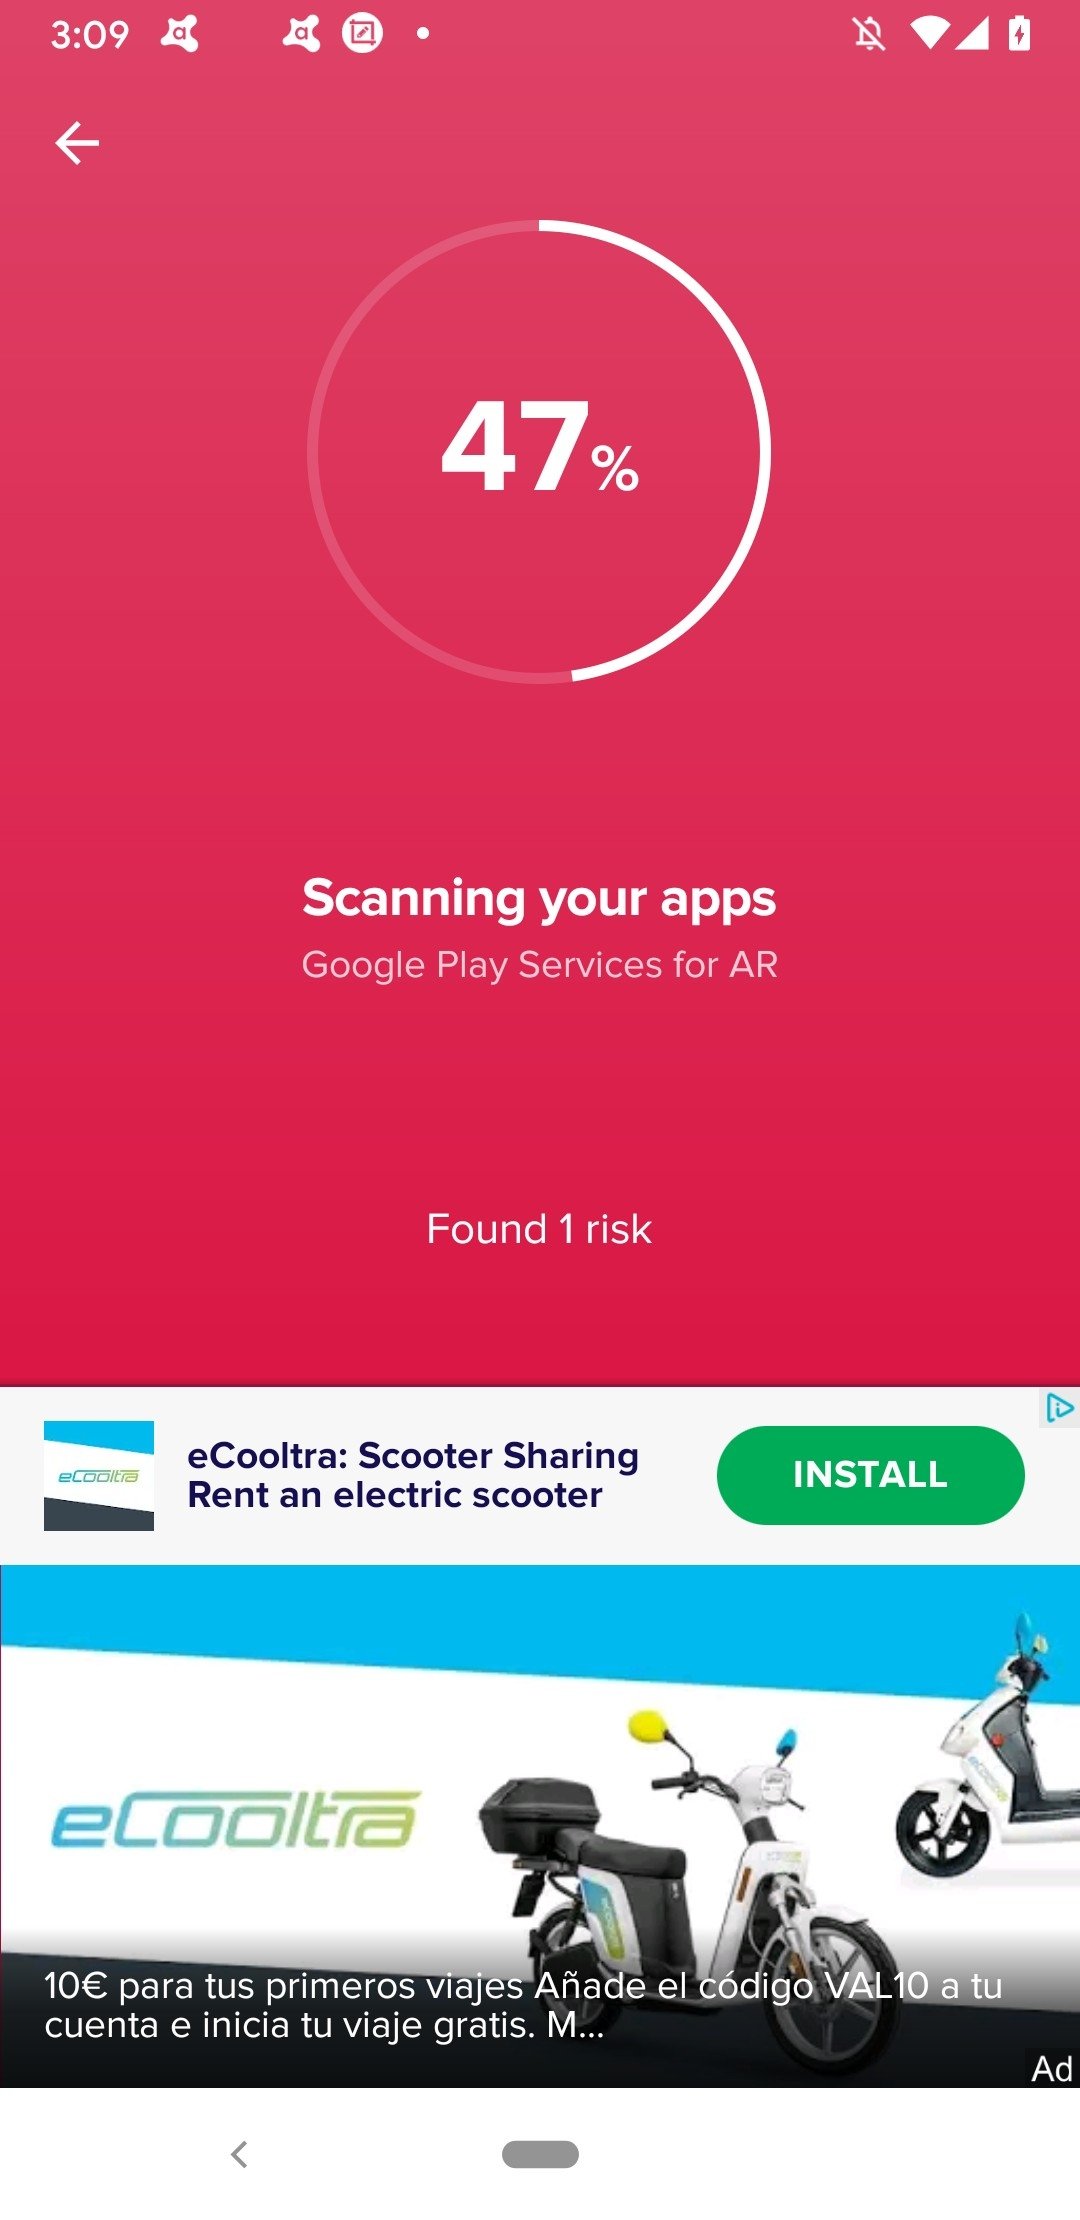 Avast Antivirus & Security - Apps on Google Play